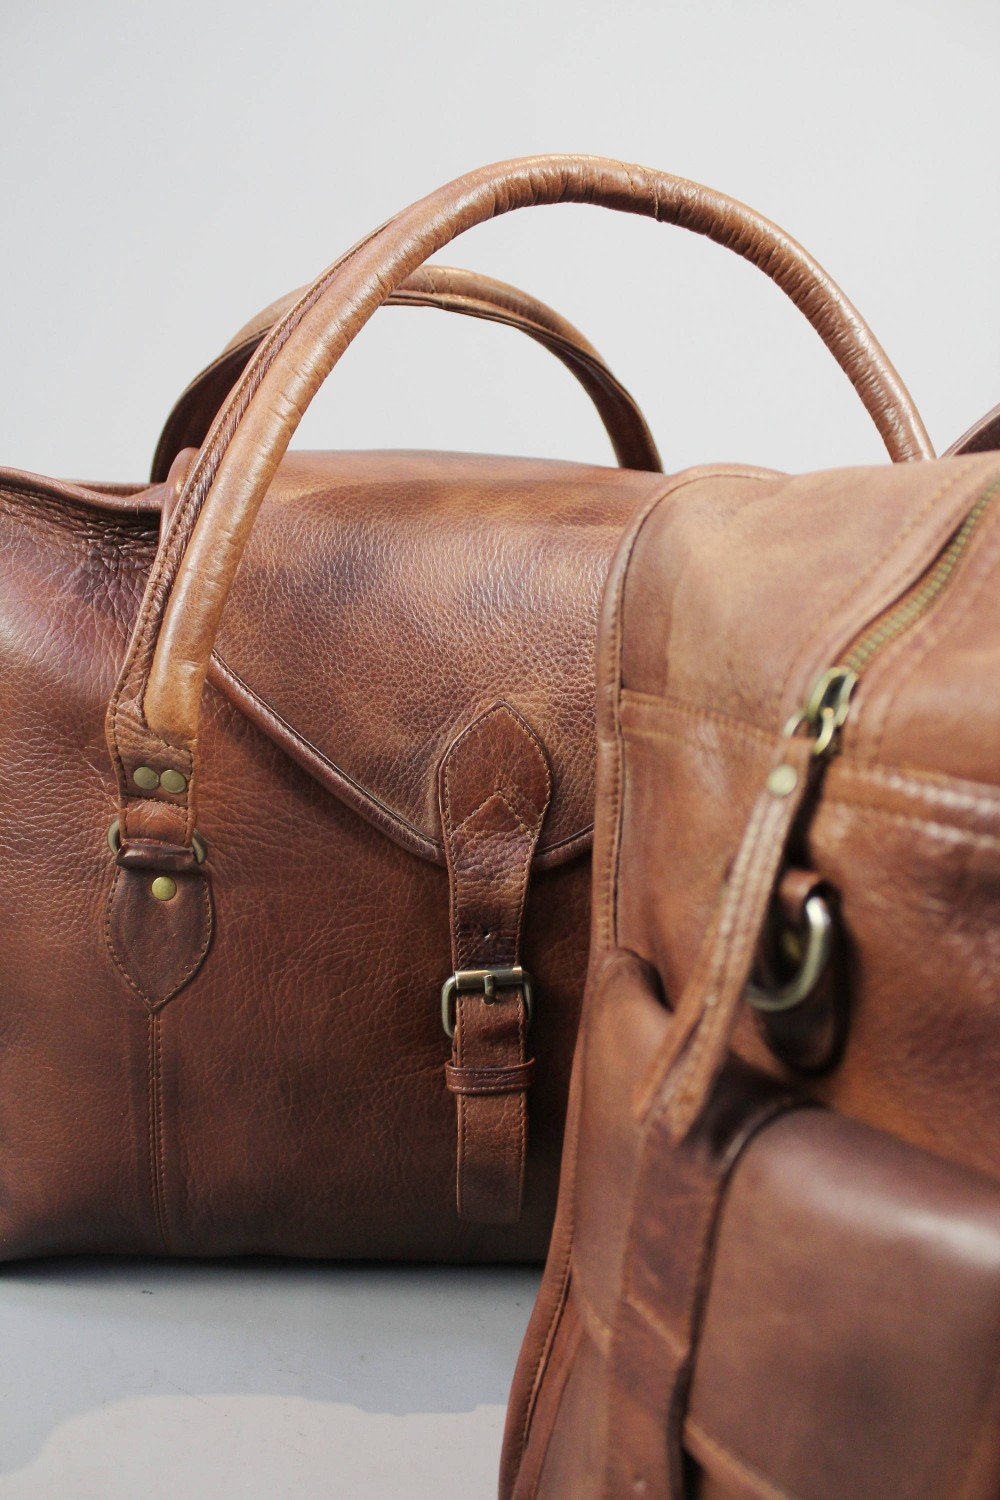 Shriners Travel Bag - Vintage Brown Leather - Bricks Masons